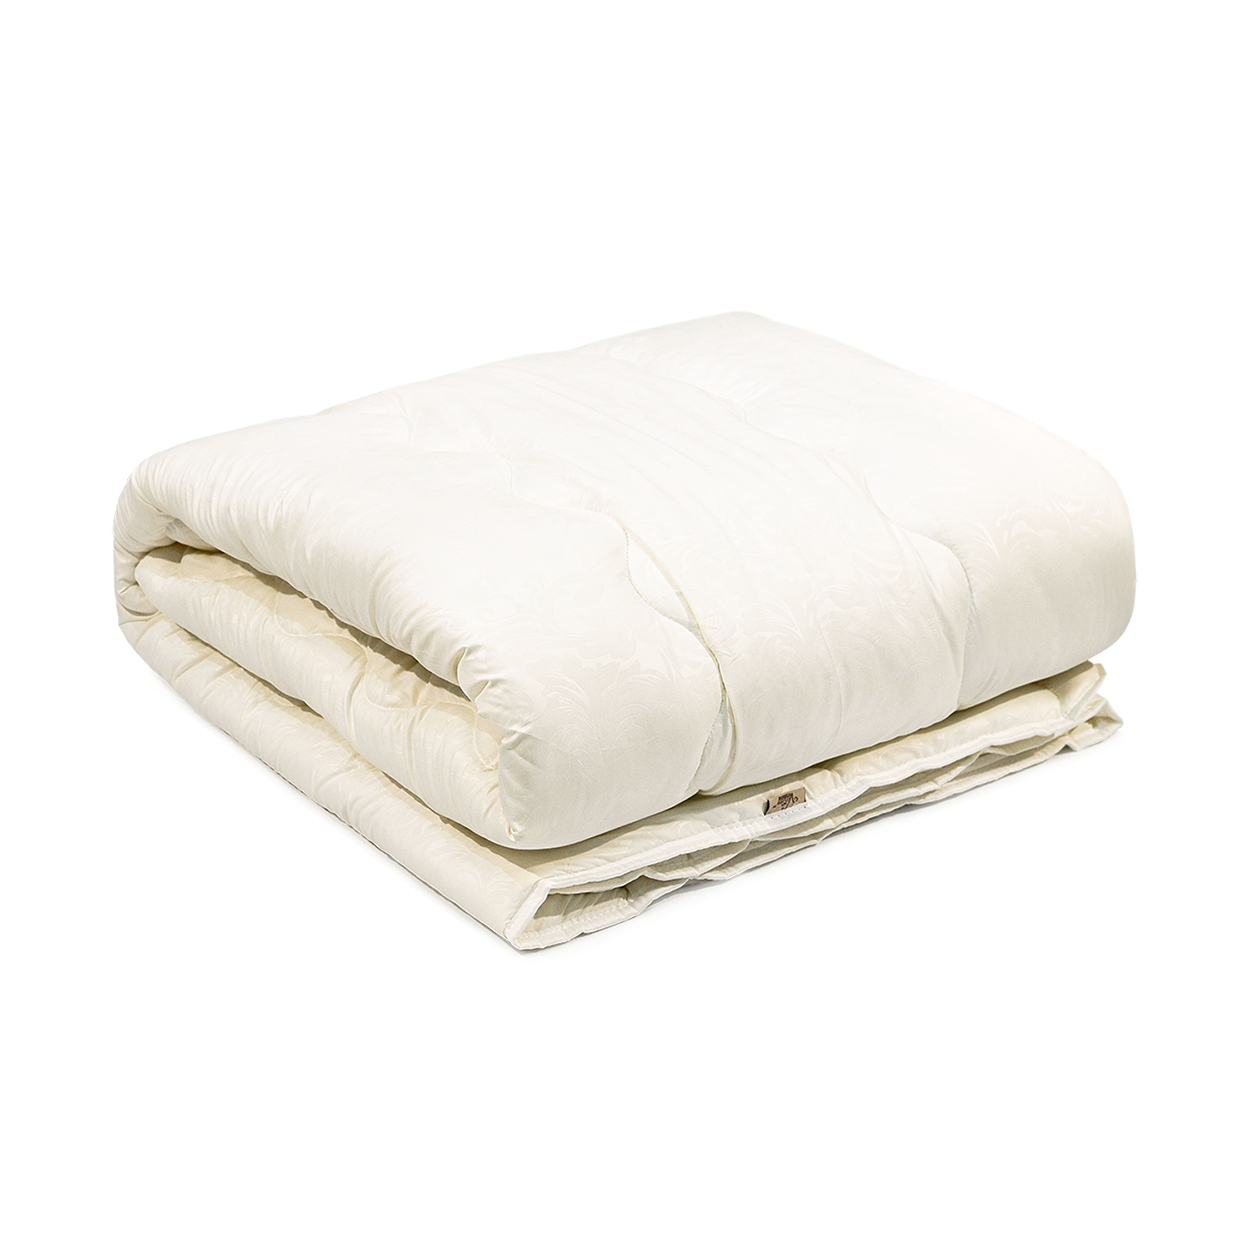 Одеяло силиконовое стеганое Вилюта Relax 170х205